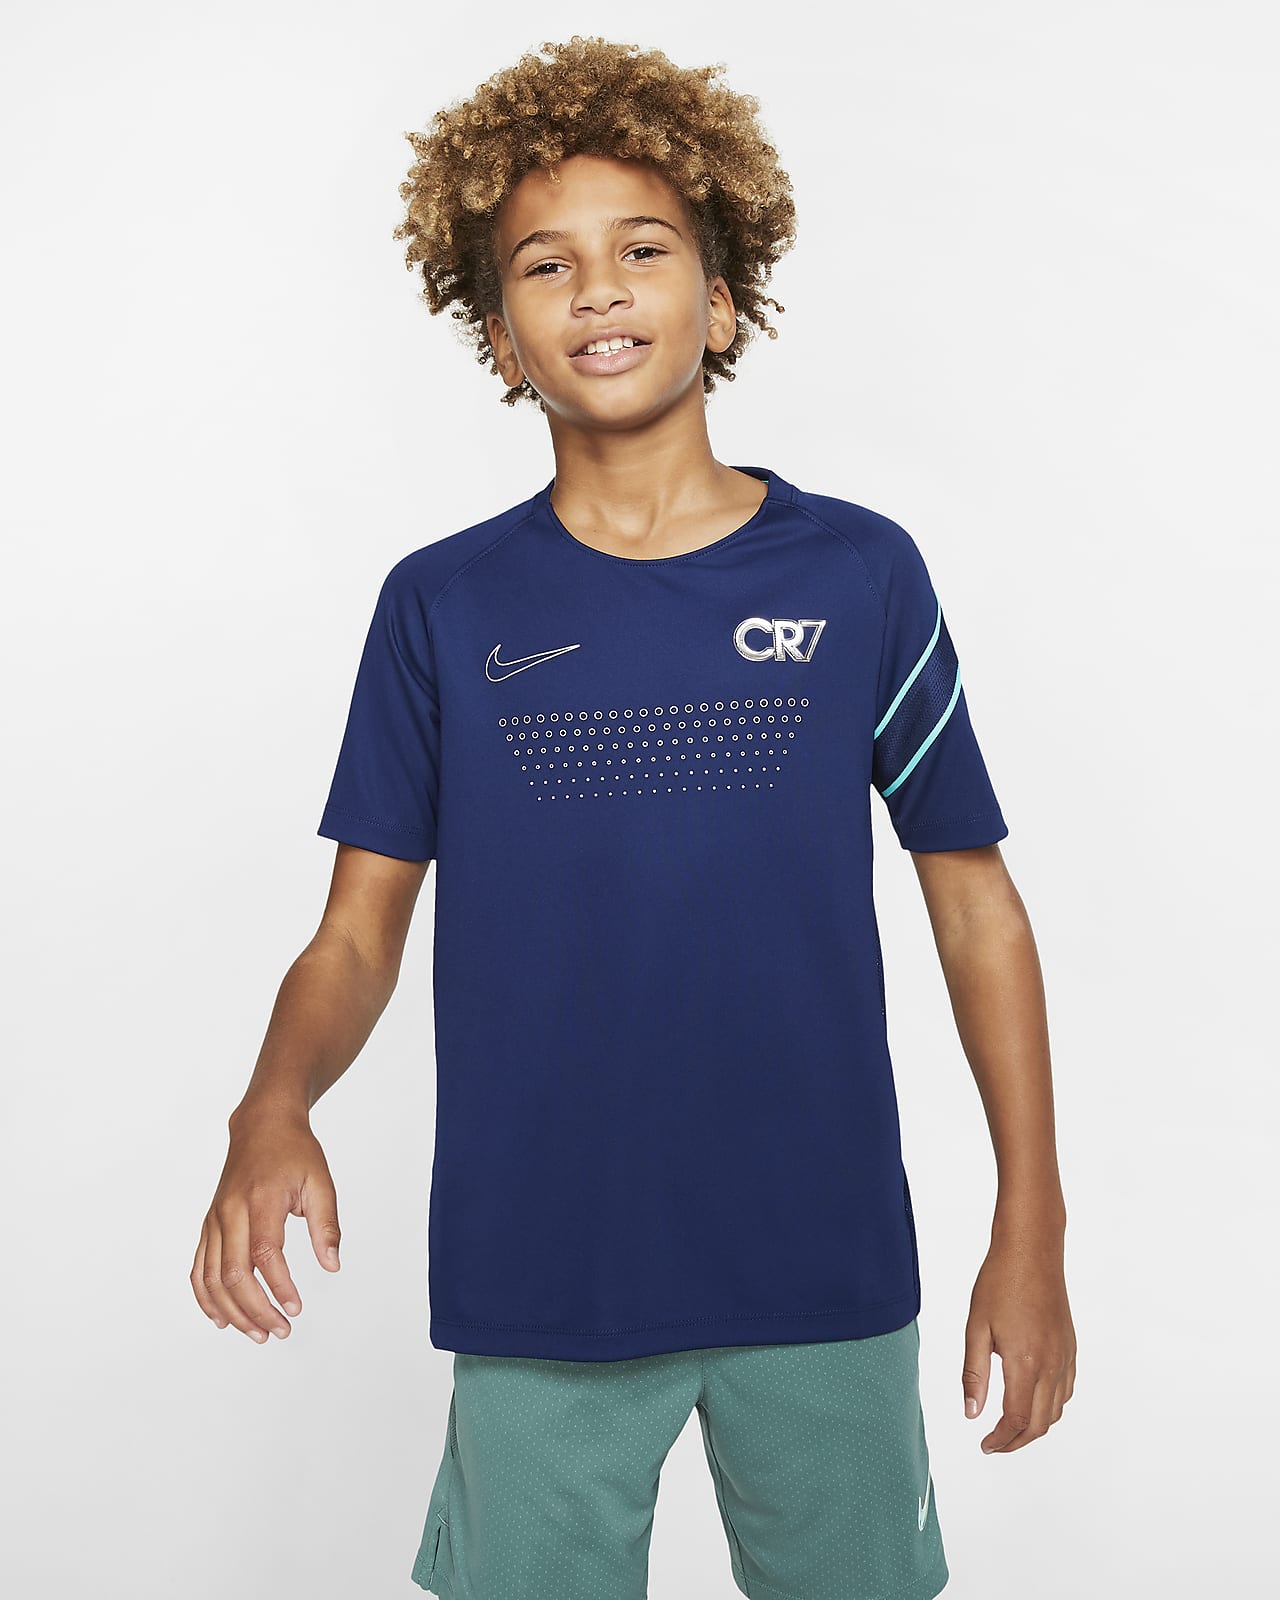 cr7 clothing kids